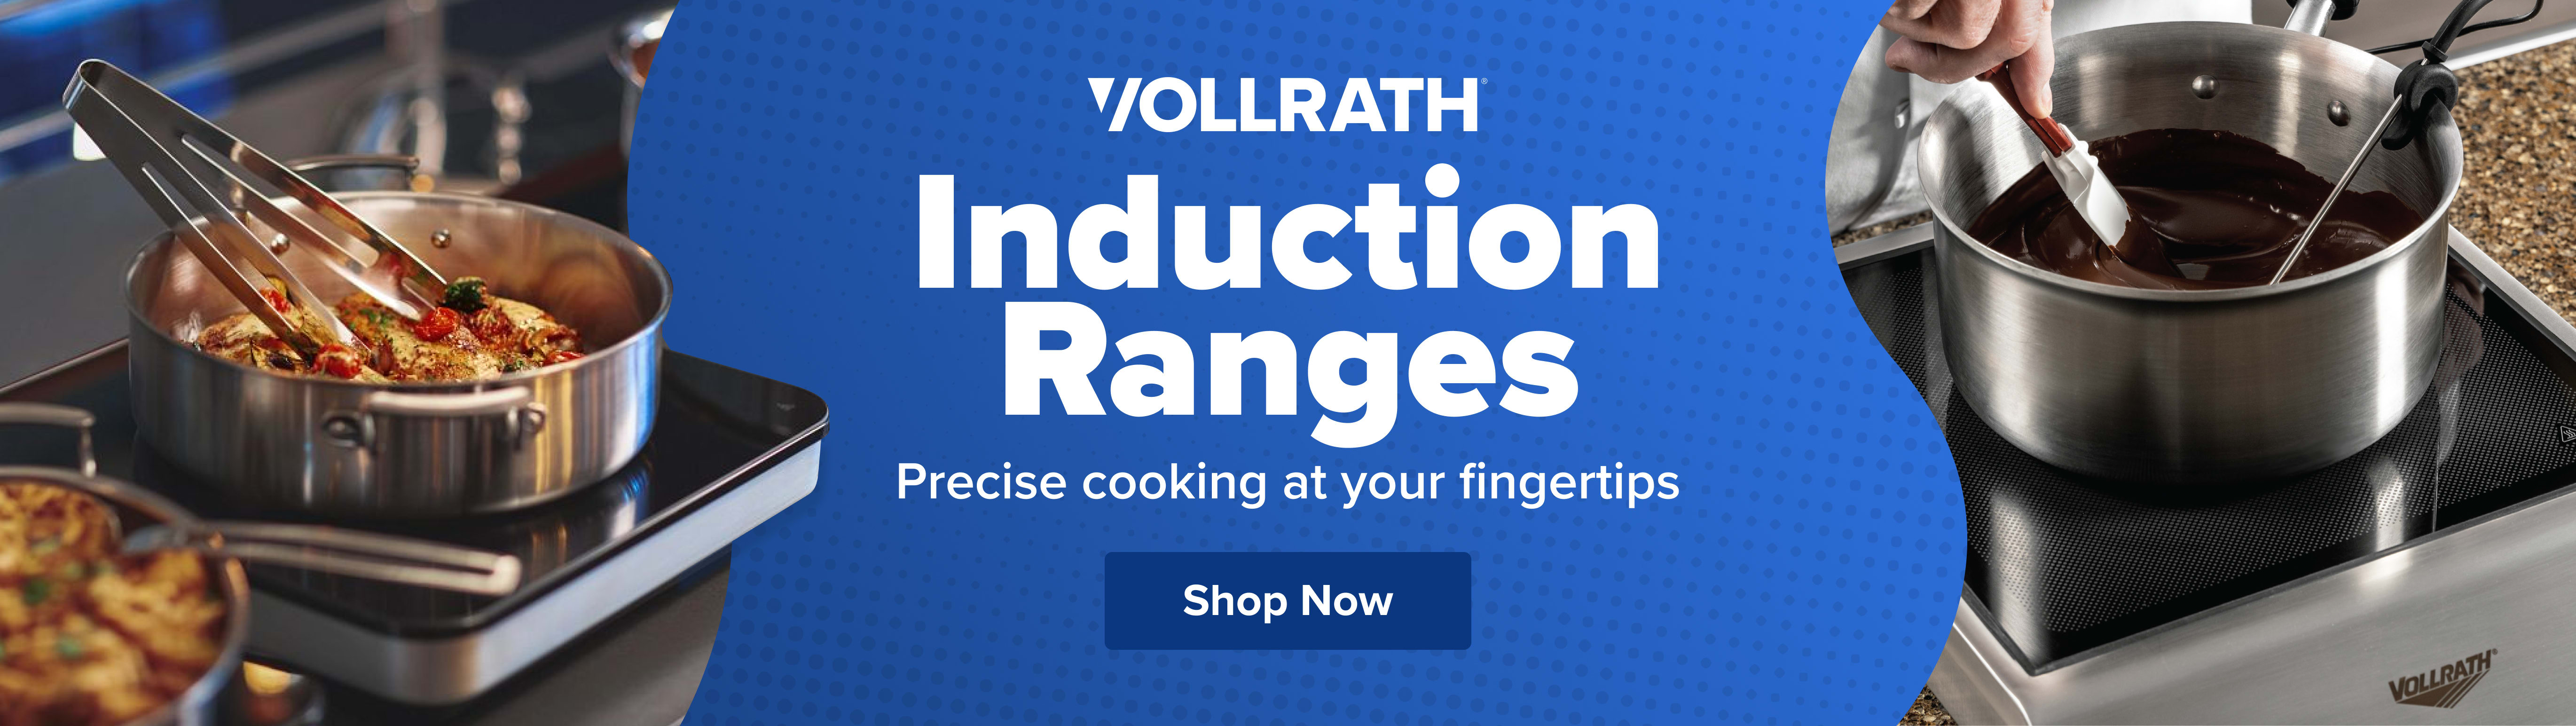 Vollrath Induction Ranges